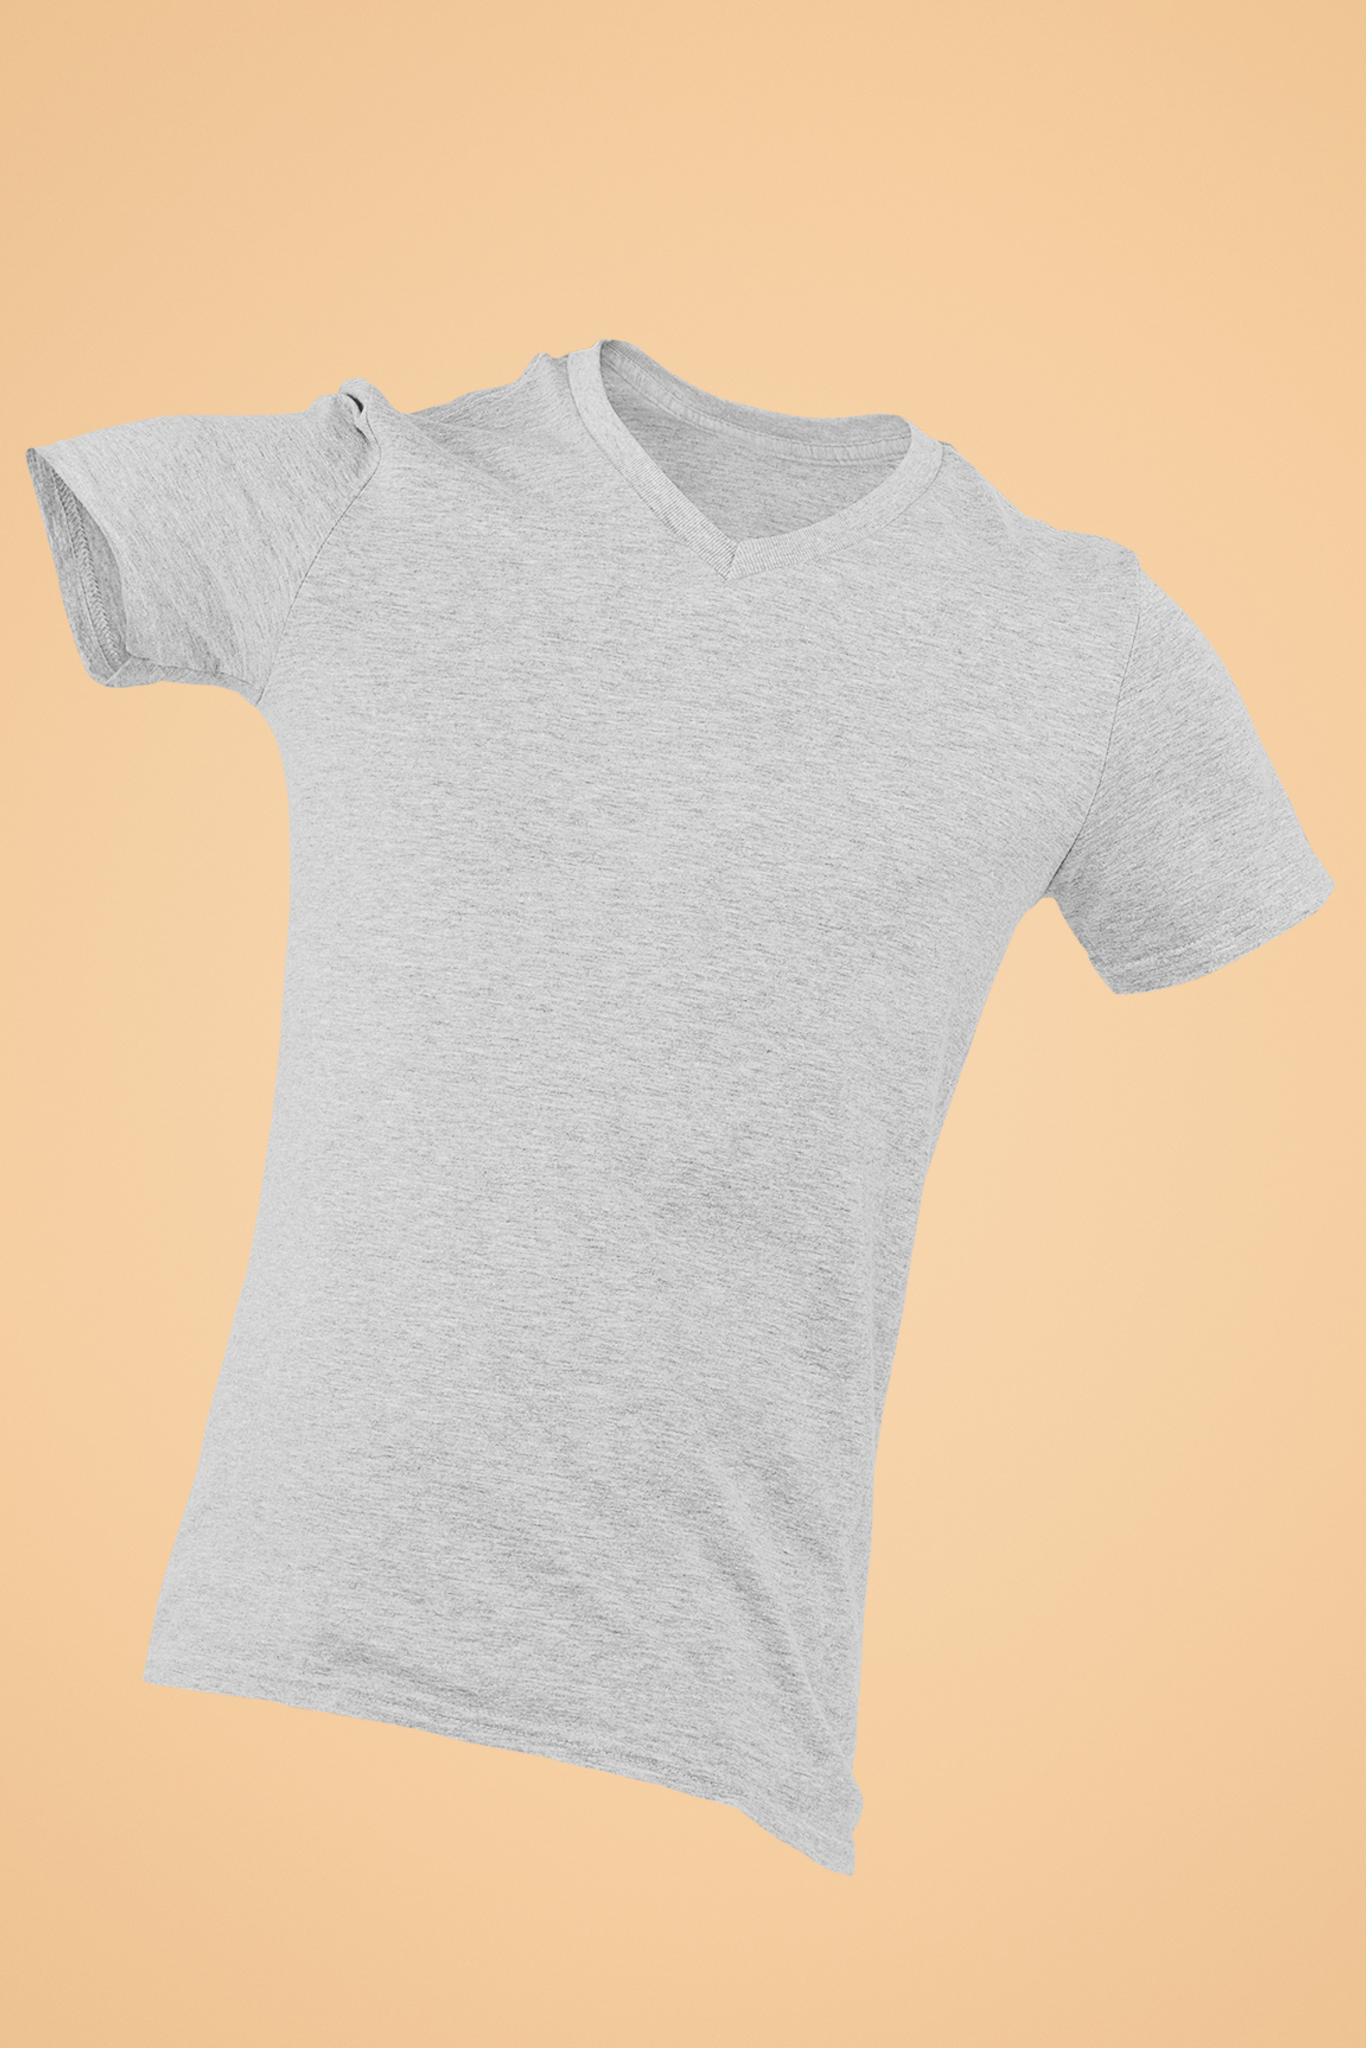 Men's V-Neck: Grey T-Shirt